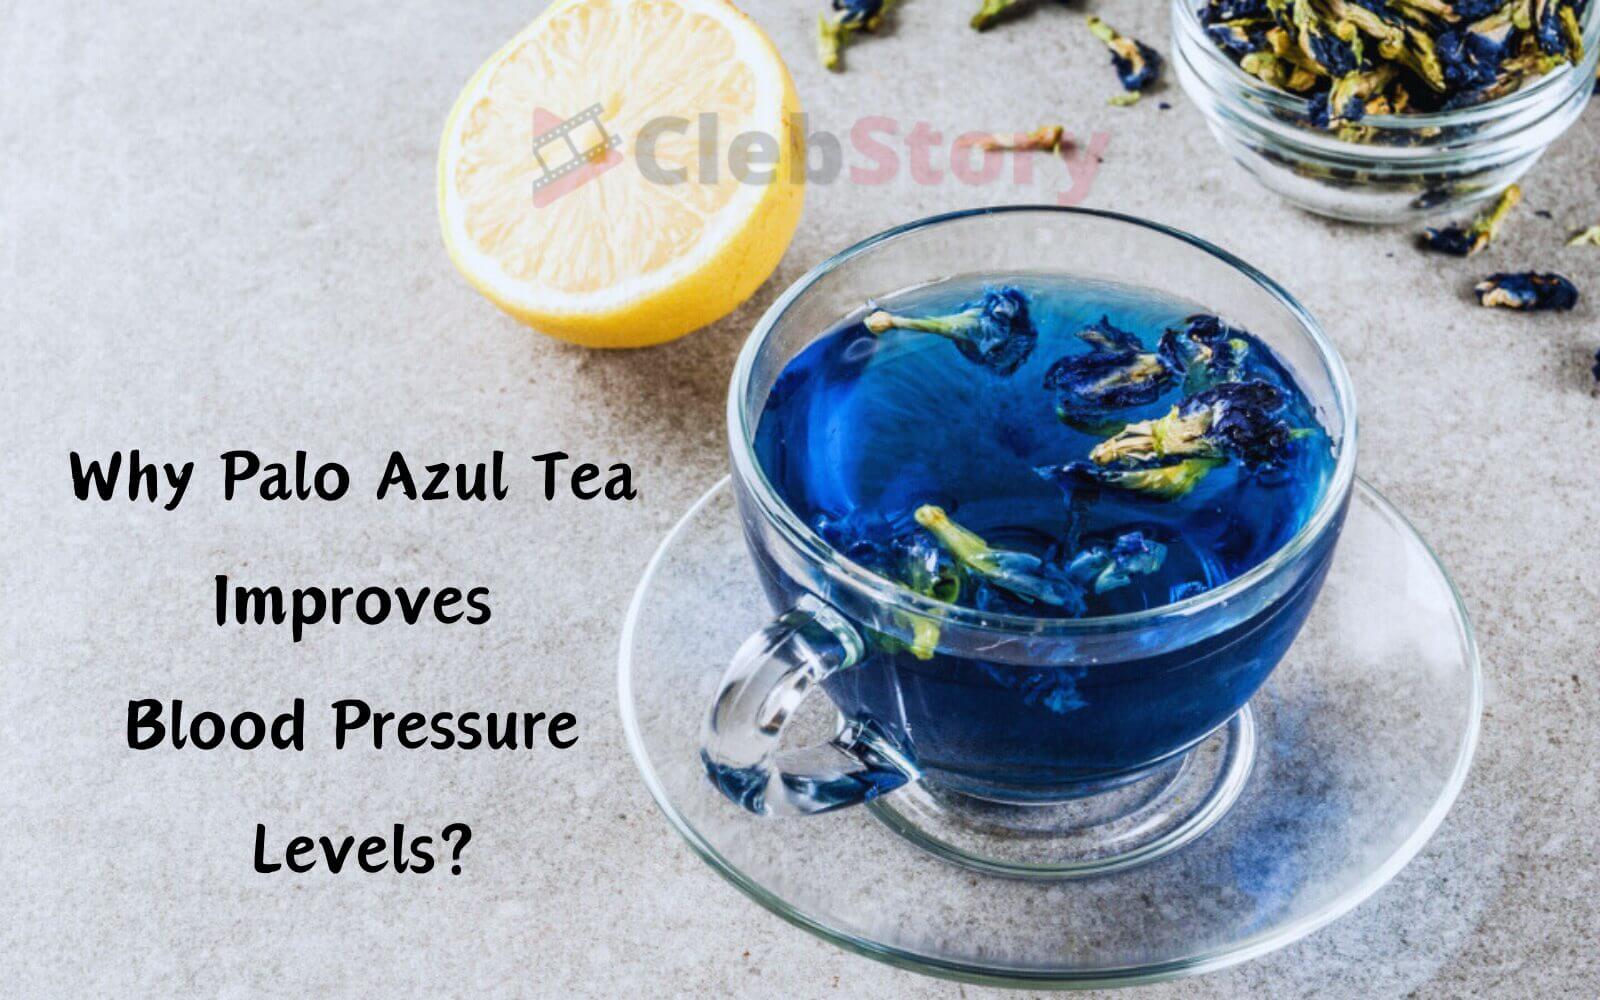 Why Palo Azul Tea Improves Blood Pressure Levels